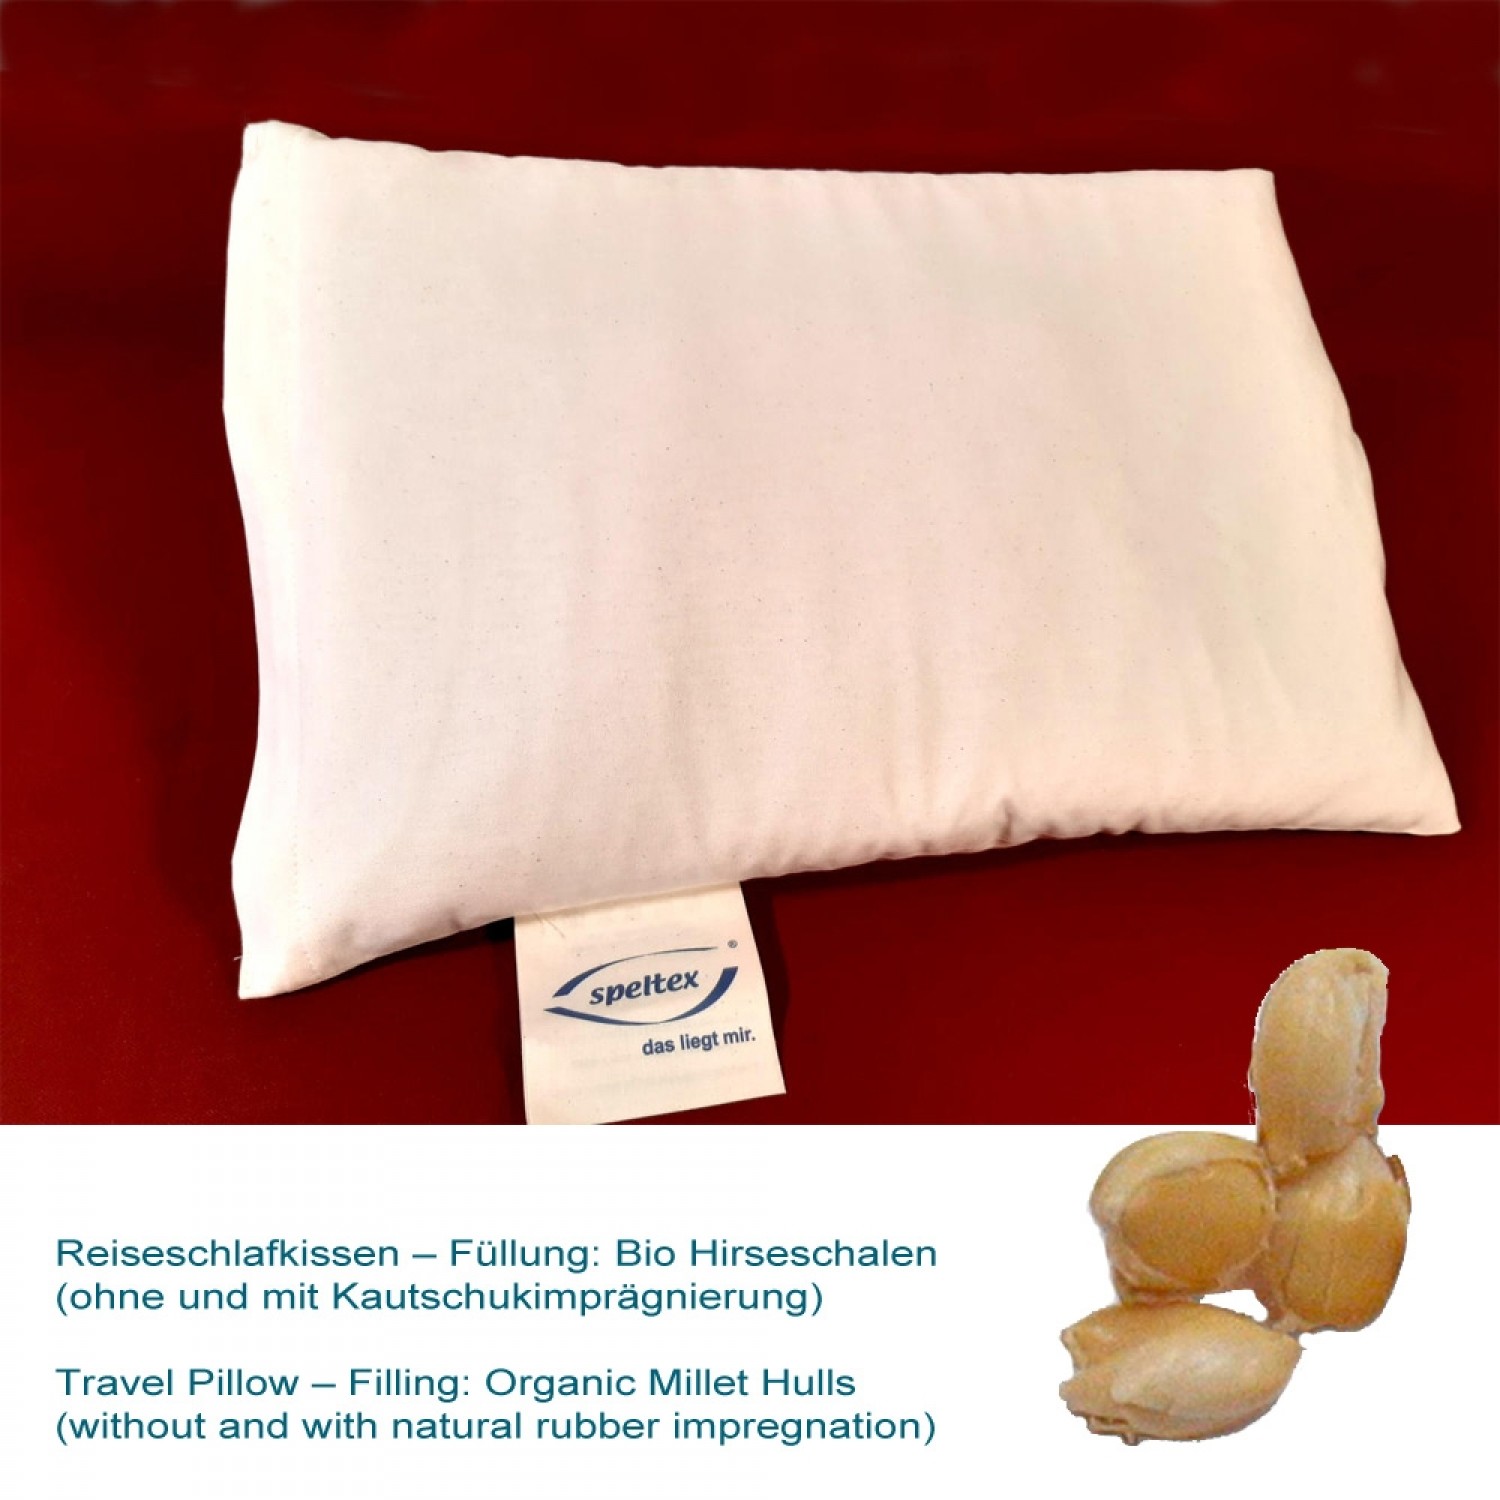 Travel Pillow with organic millet hulls | speltex